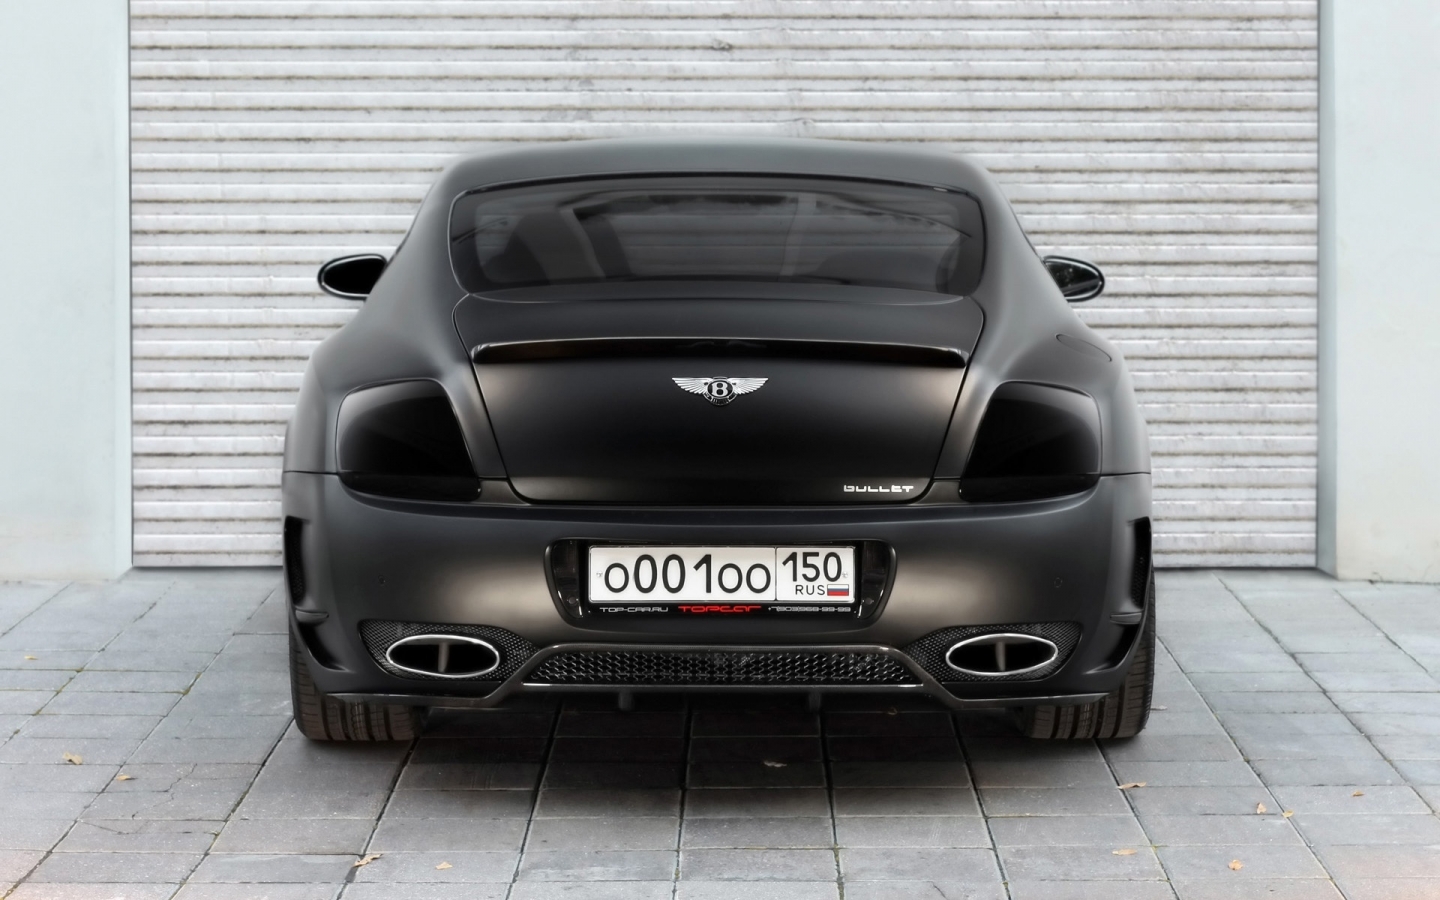 2010 Bentley Continental GT Bullet Rear for 1440 x 900 widescreen resolution